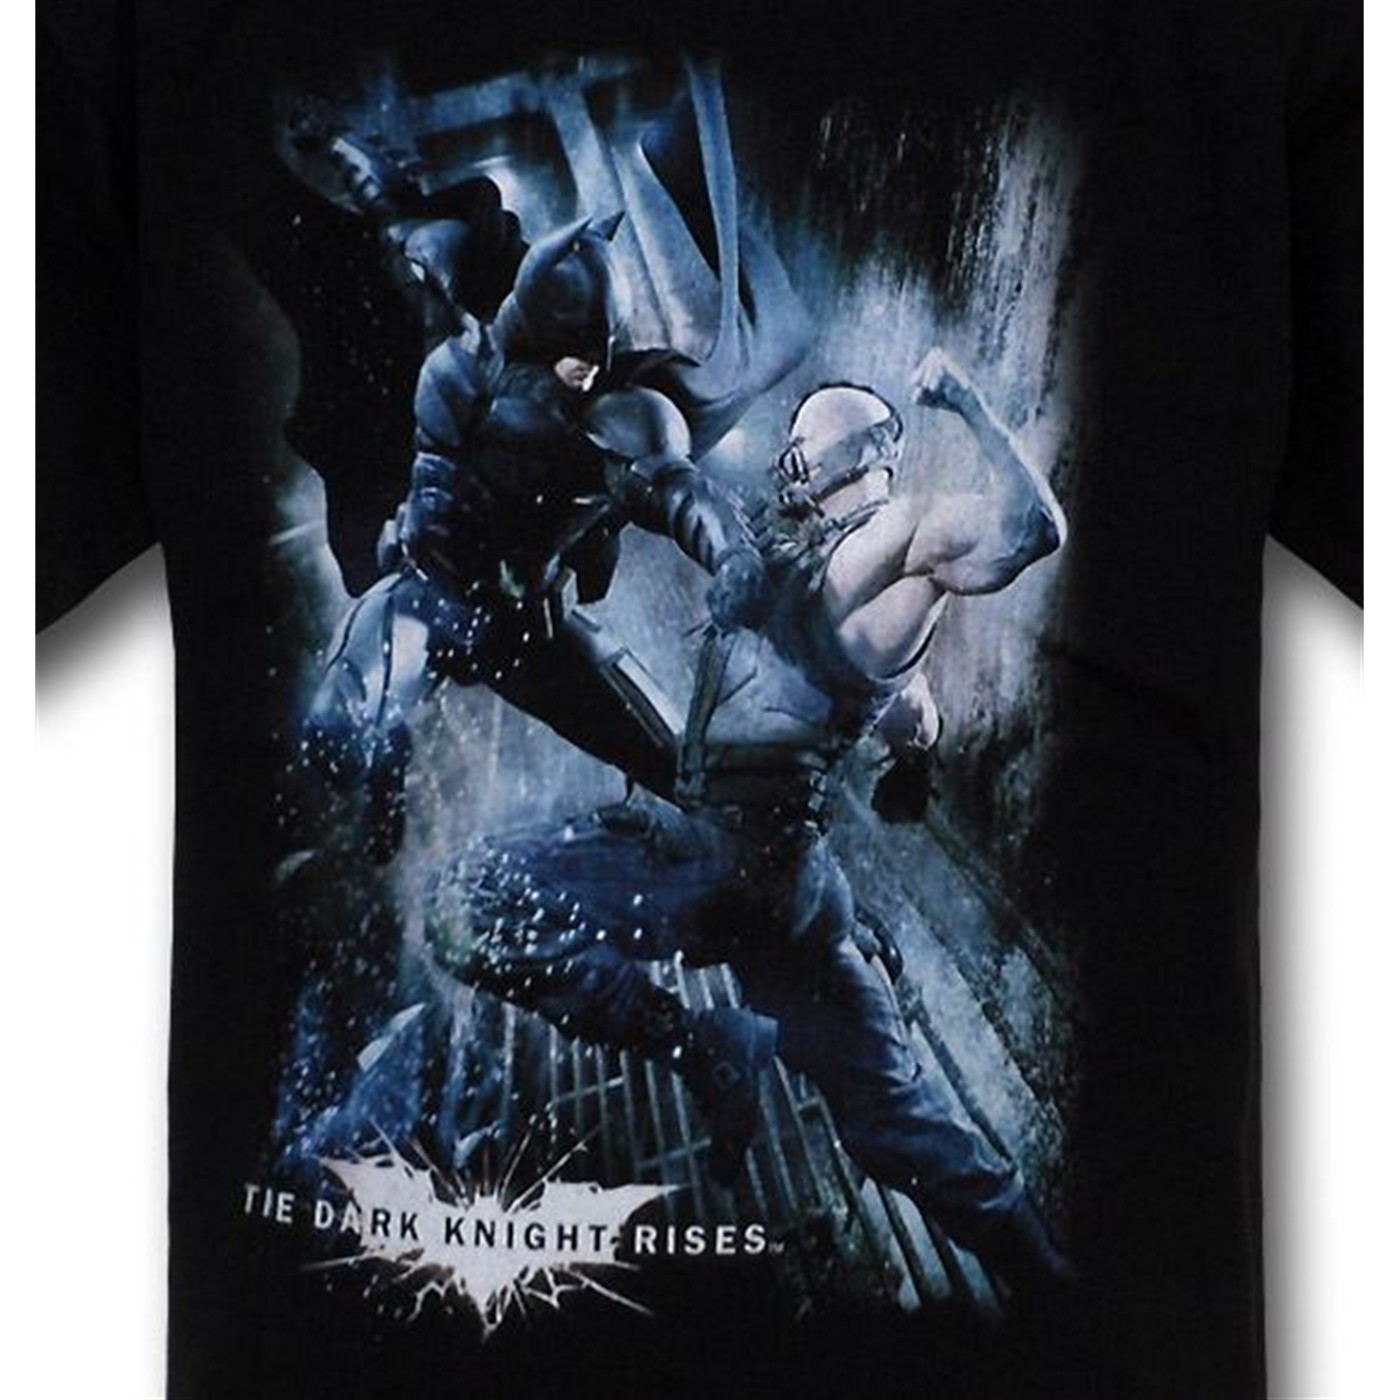 Dark Knight Rises Kids Enemies Clash T-Shirt